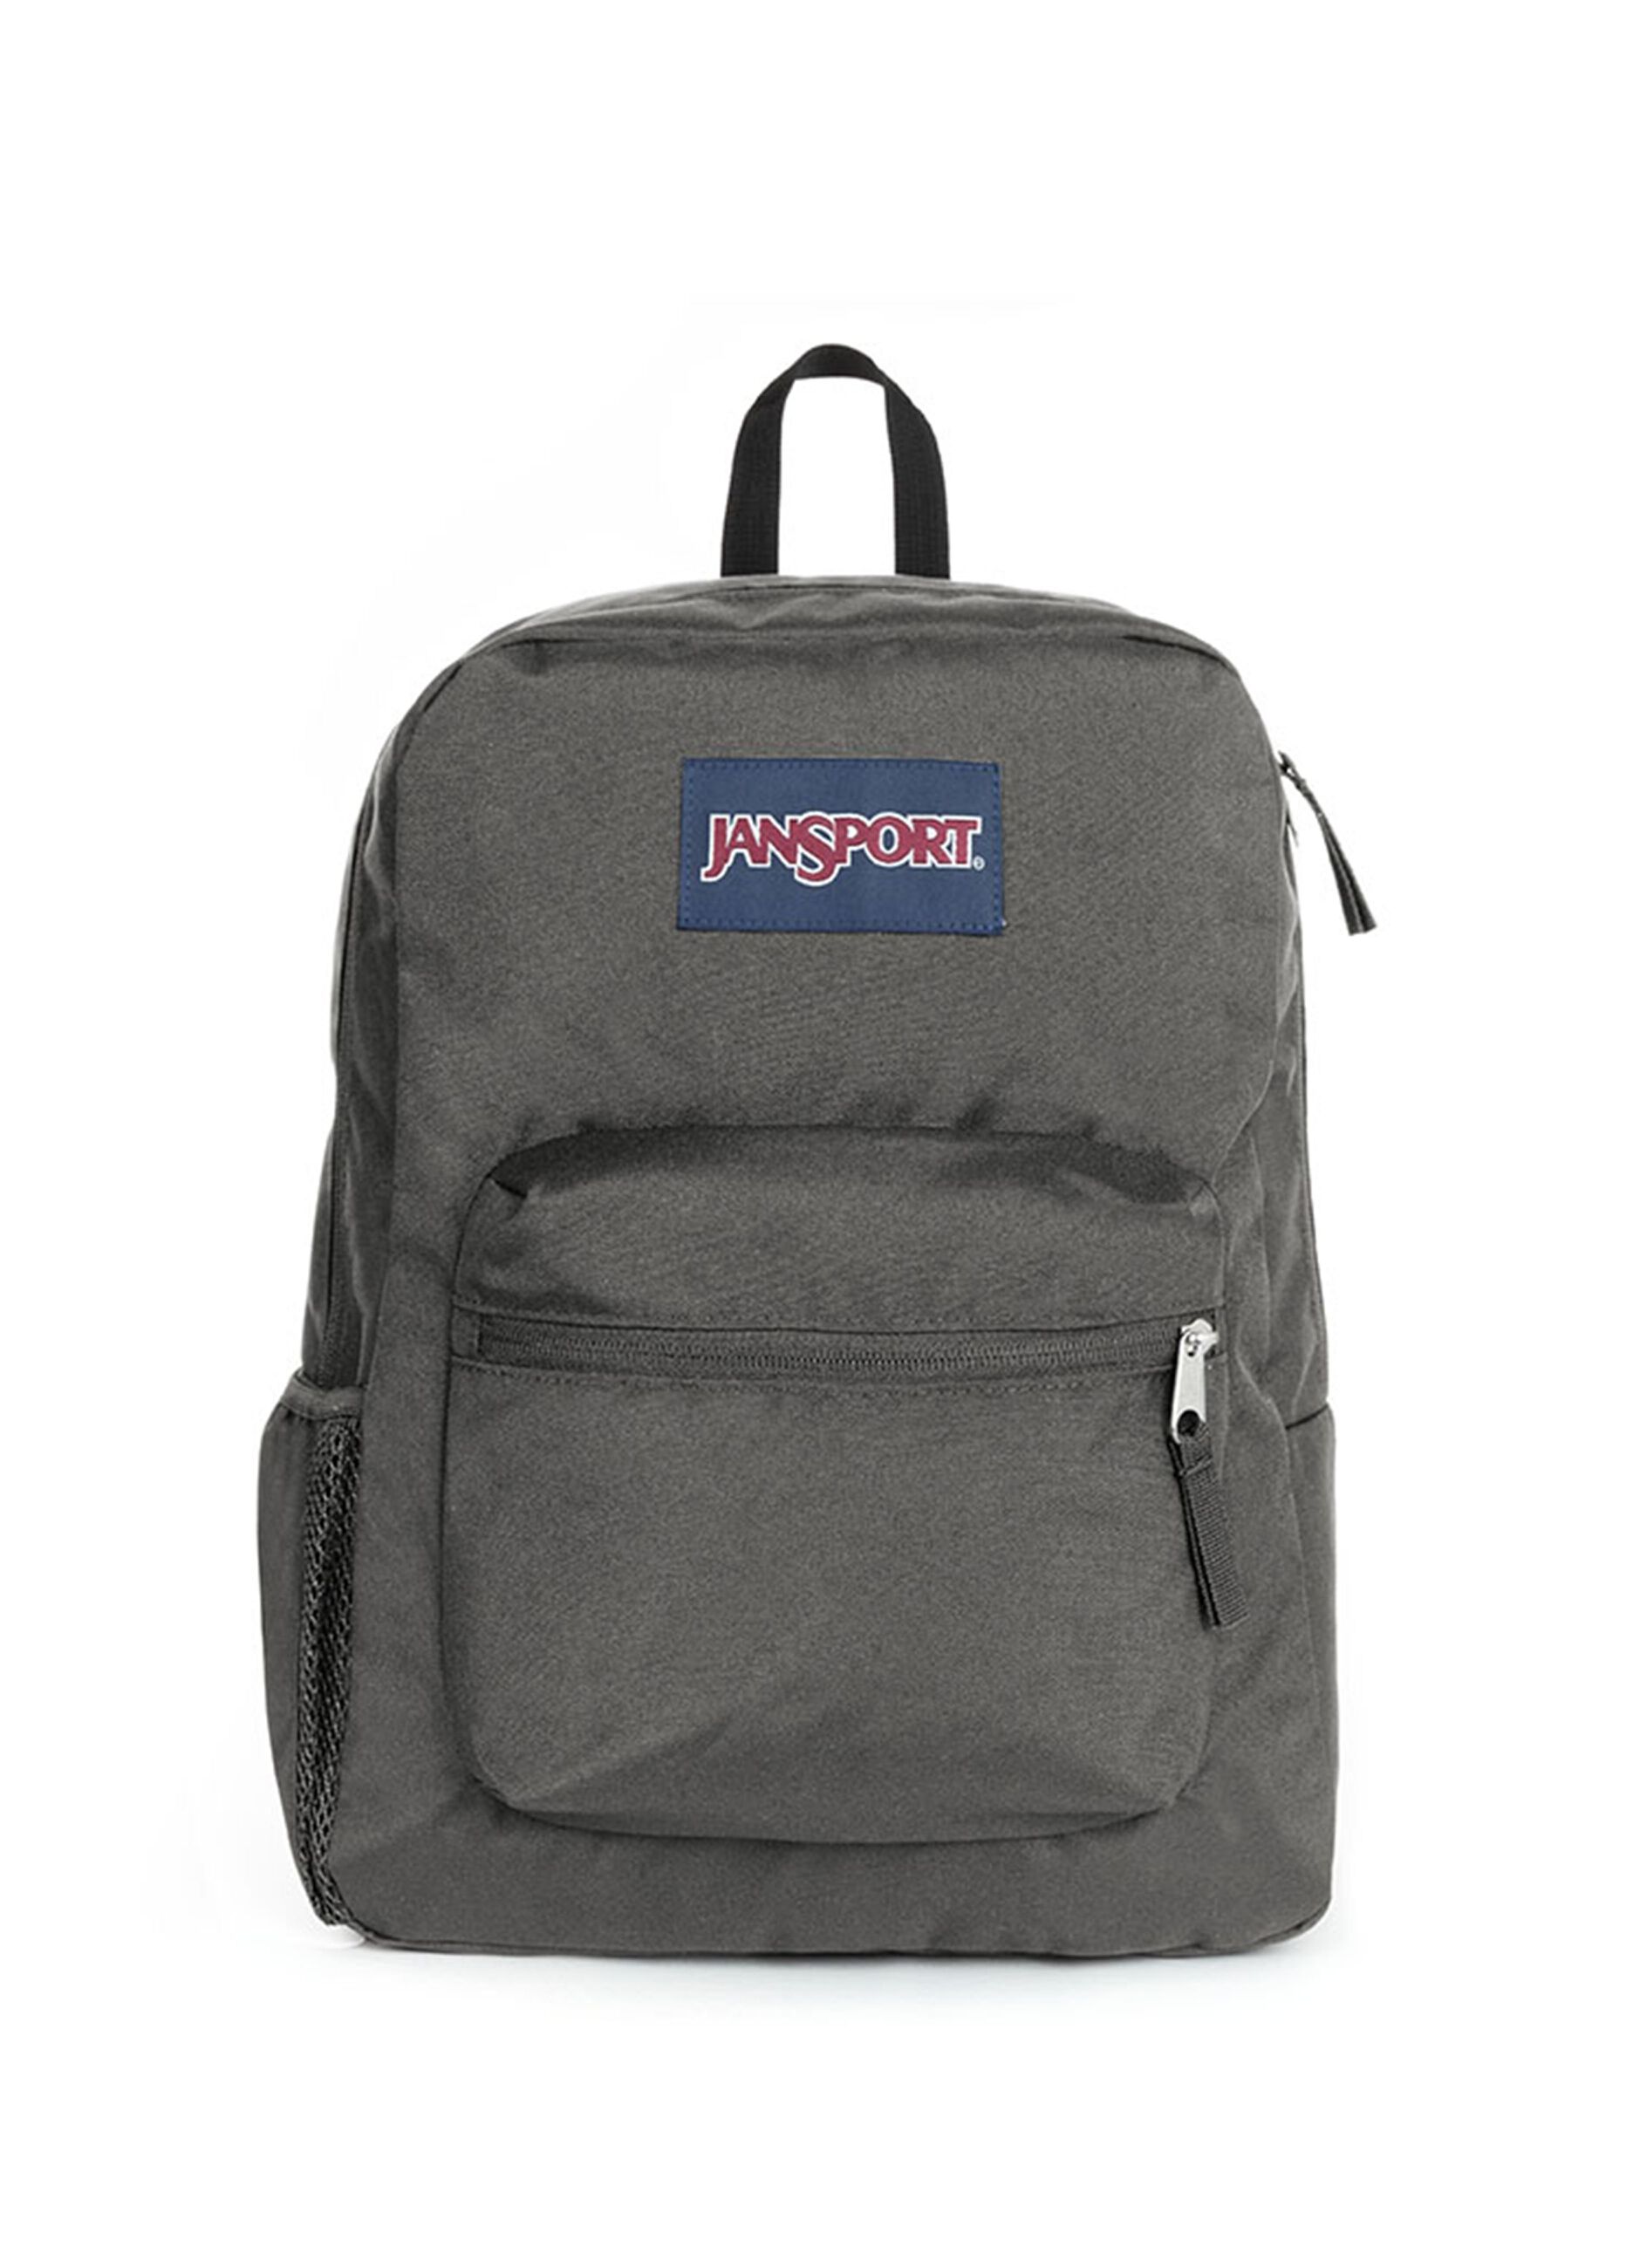 Jansport Cross Town backpack